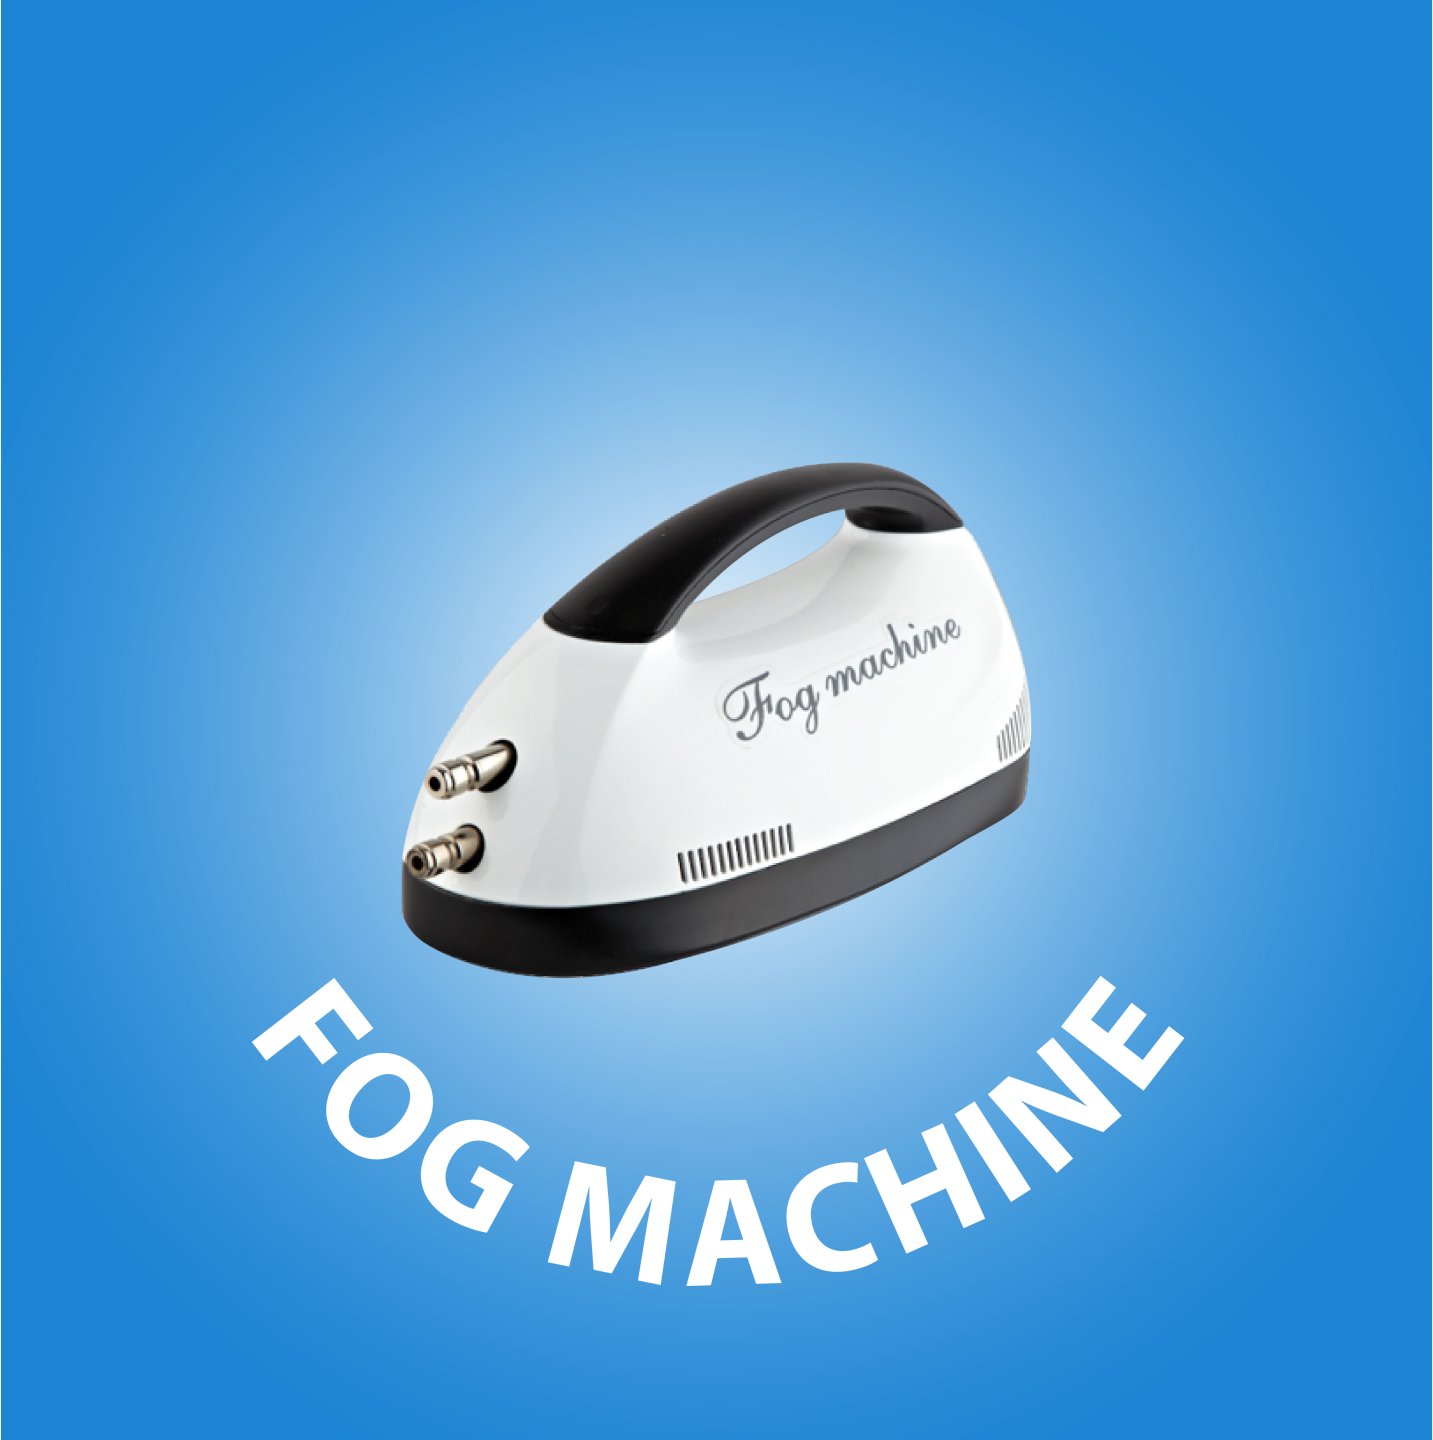  Fog Machine cover kategori website 24